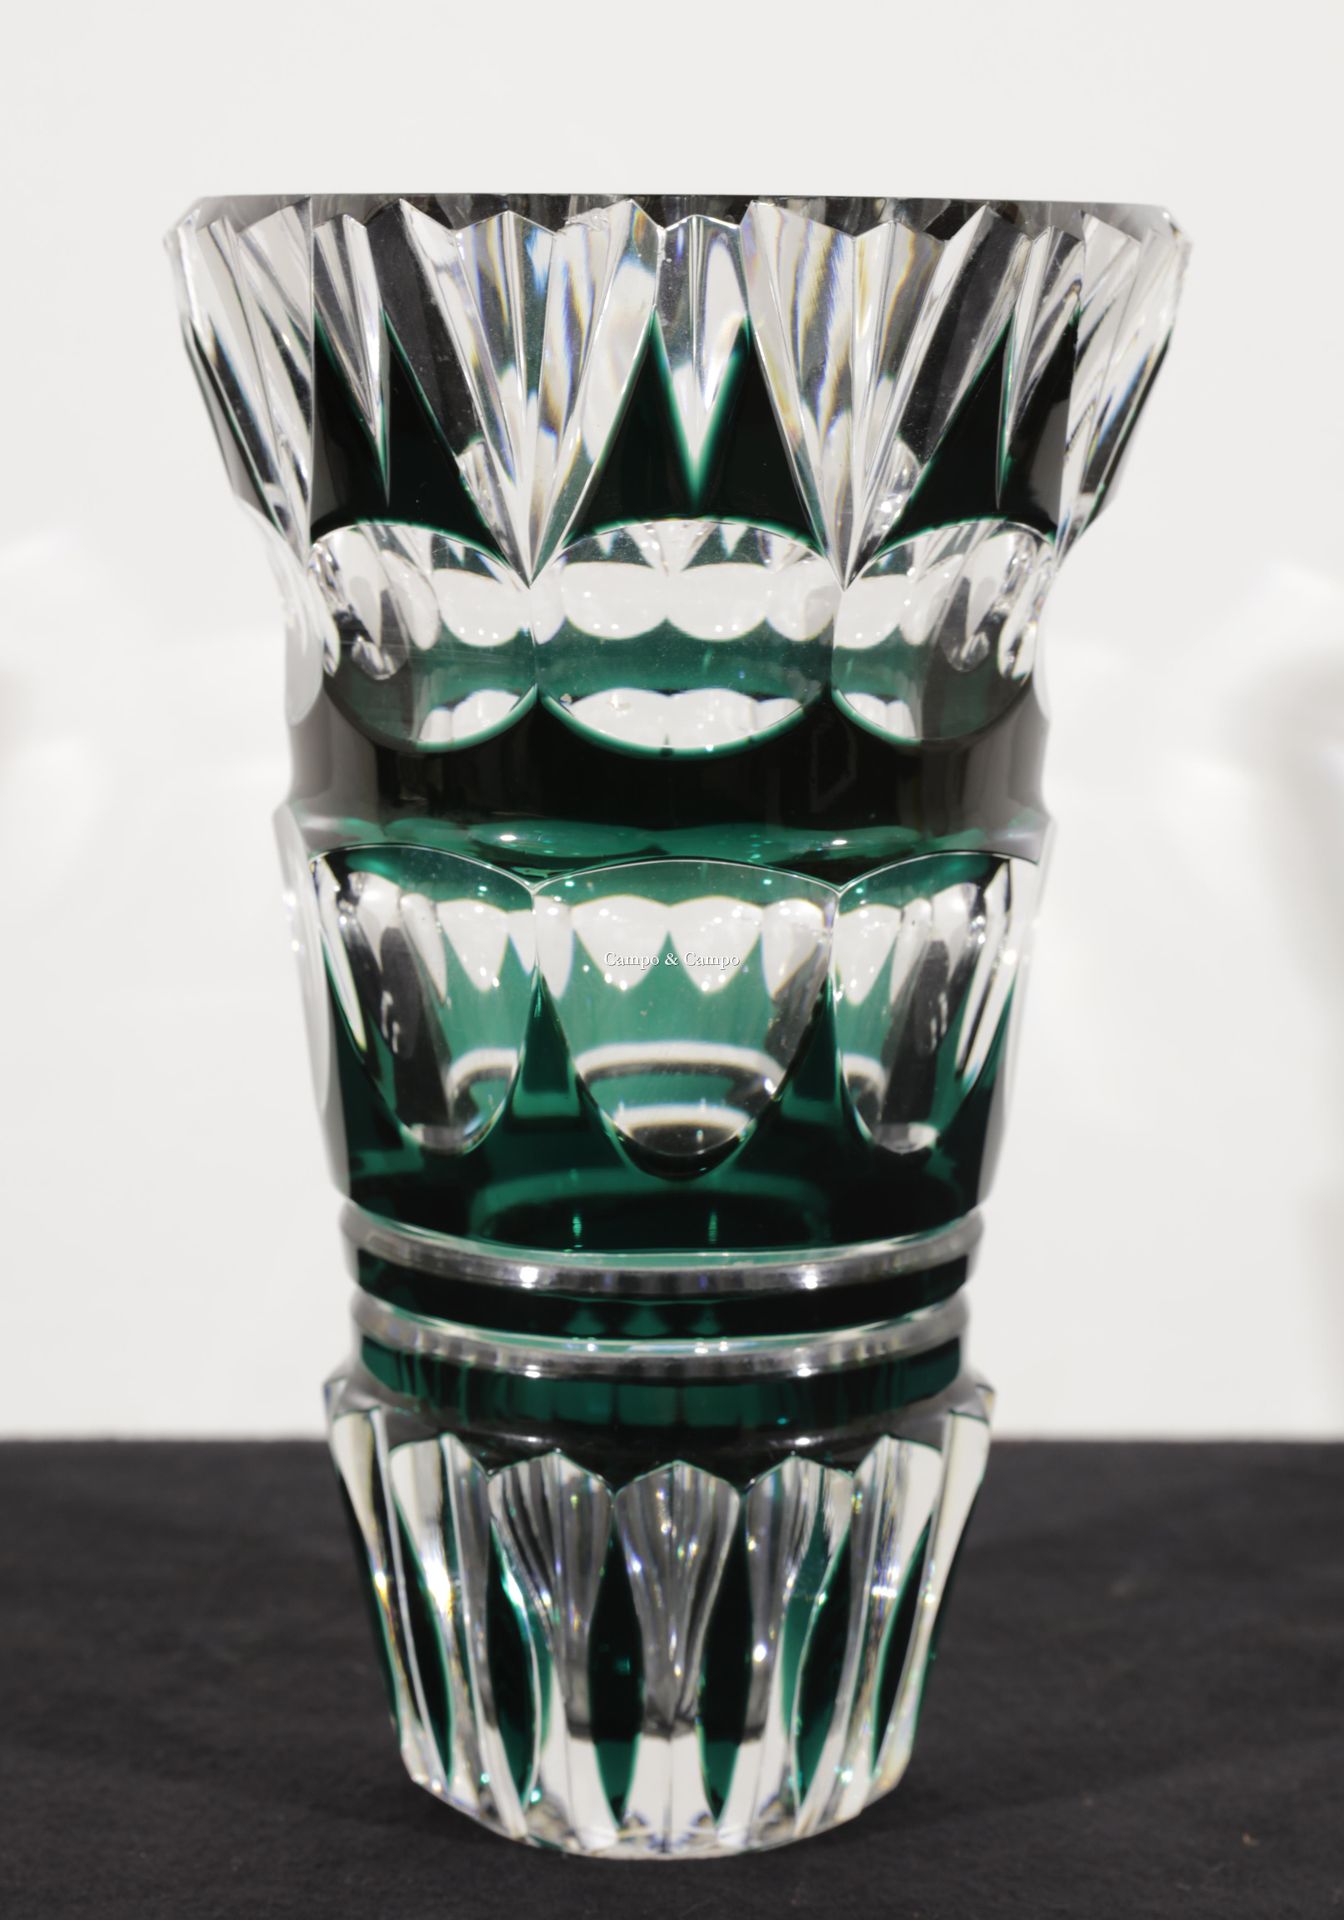 VARIA 1880-1964 Val Saint Lambert vase in clear and green crystal
Val Saint Lamb&hellip;